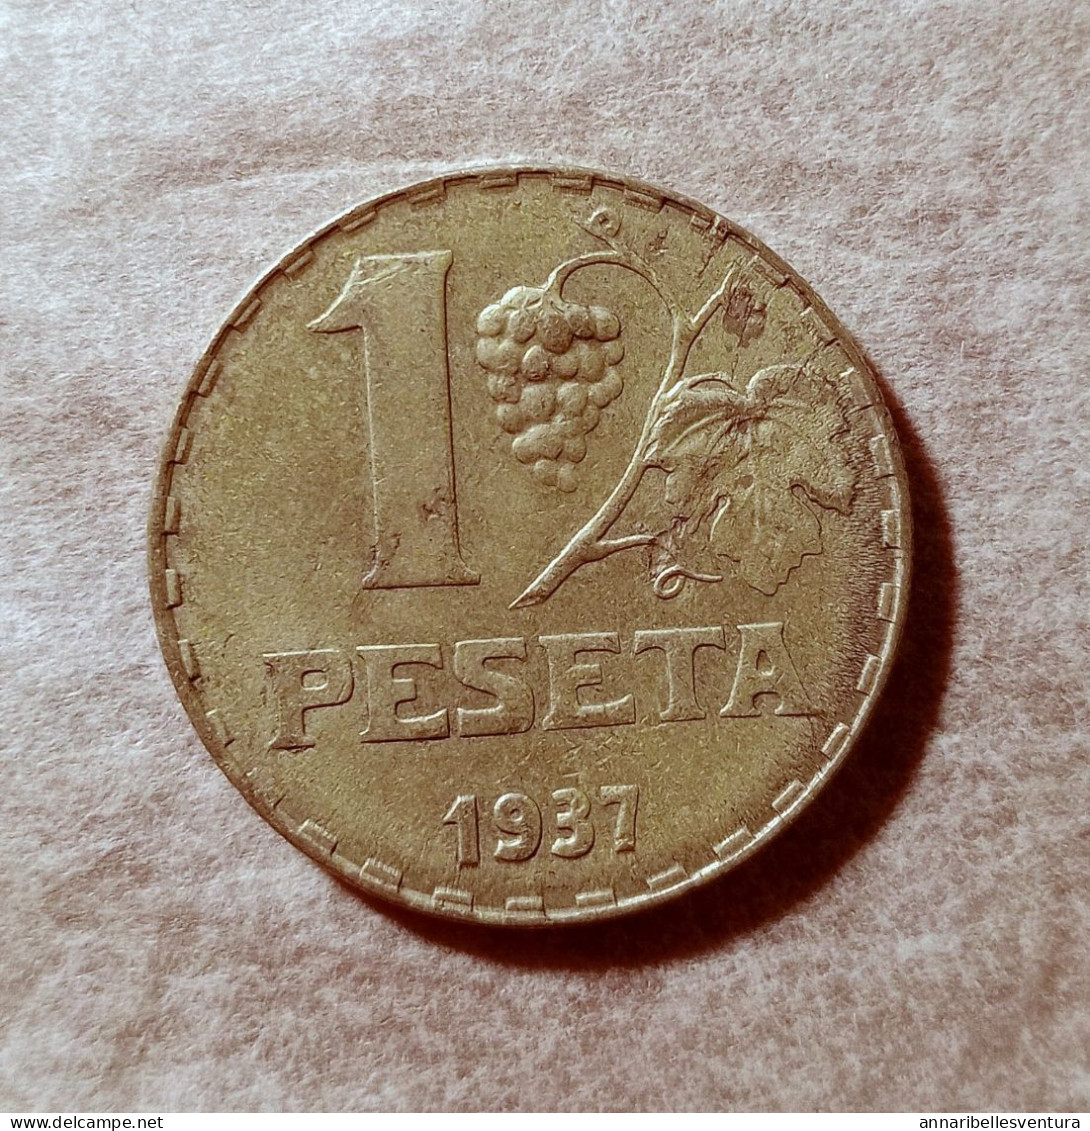 1 PESETA, ALFONSO XIII 1937. - Zona Republicana